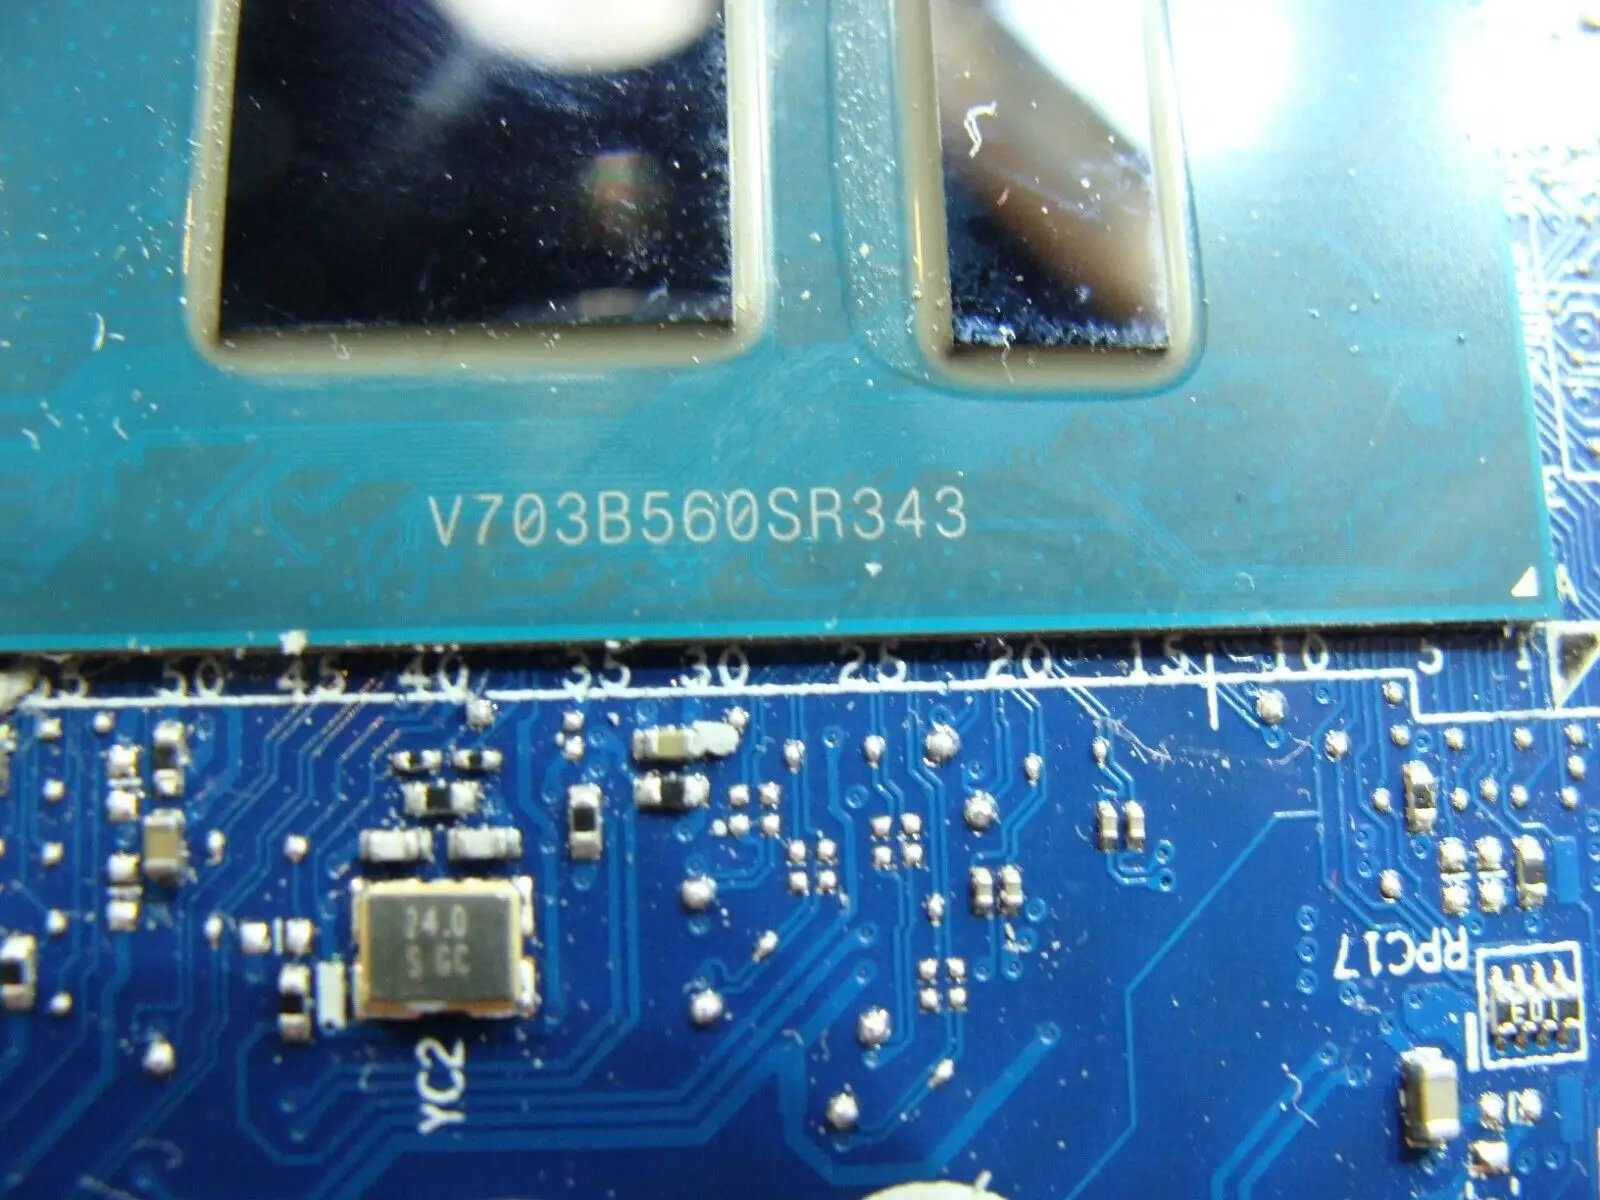 Lenovo IdeaPad 320-15IKB 15.6